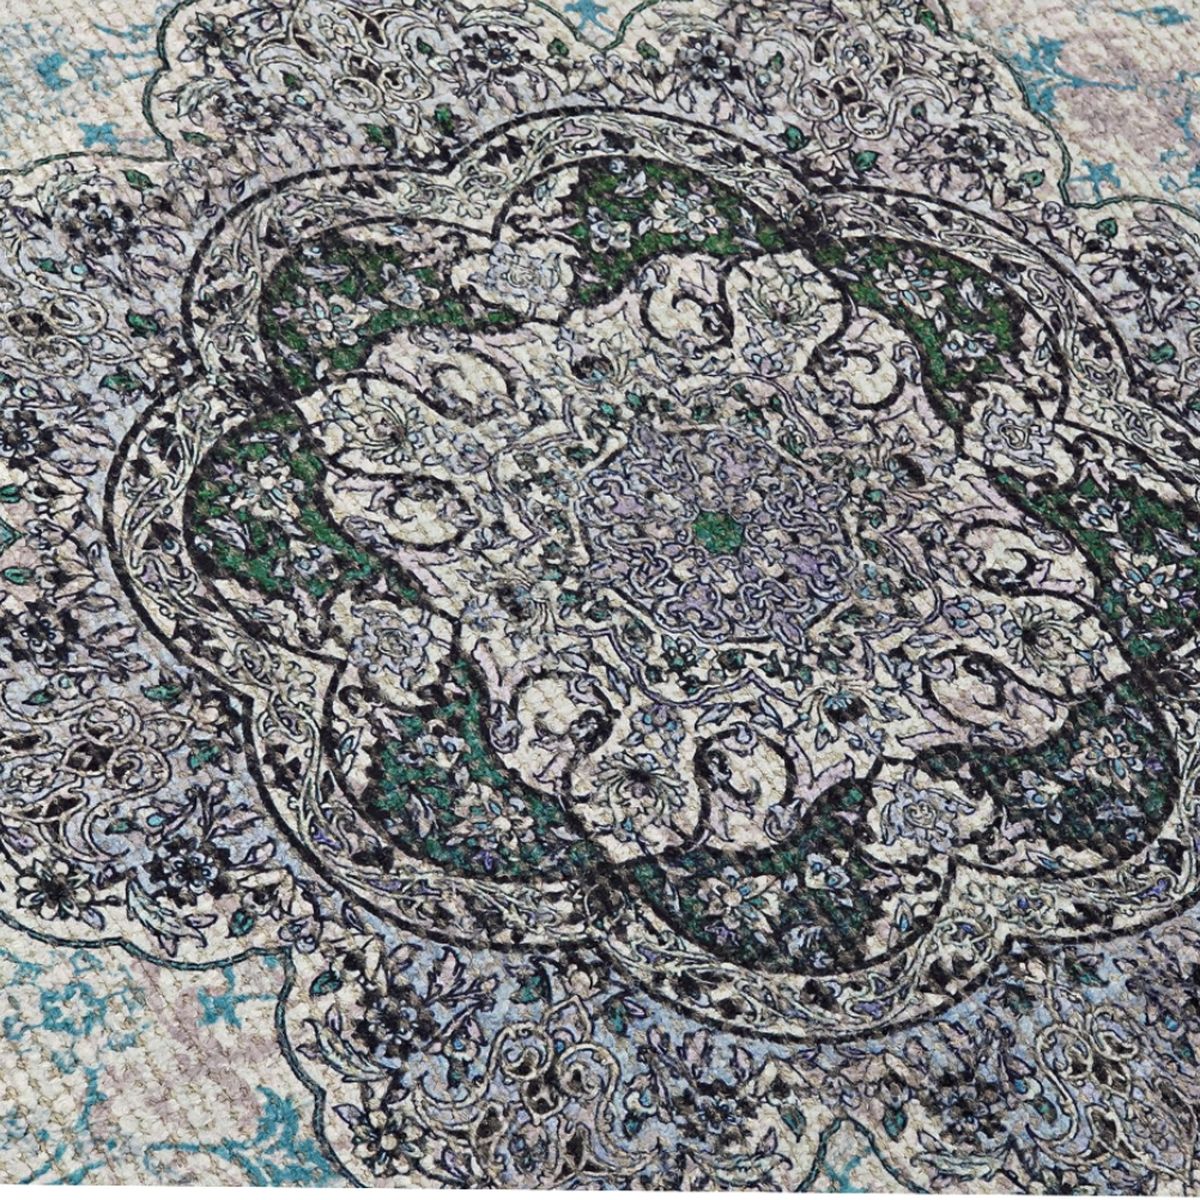 Mandala Blue carpet